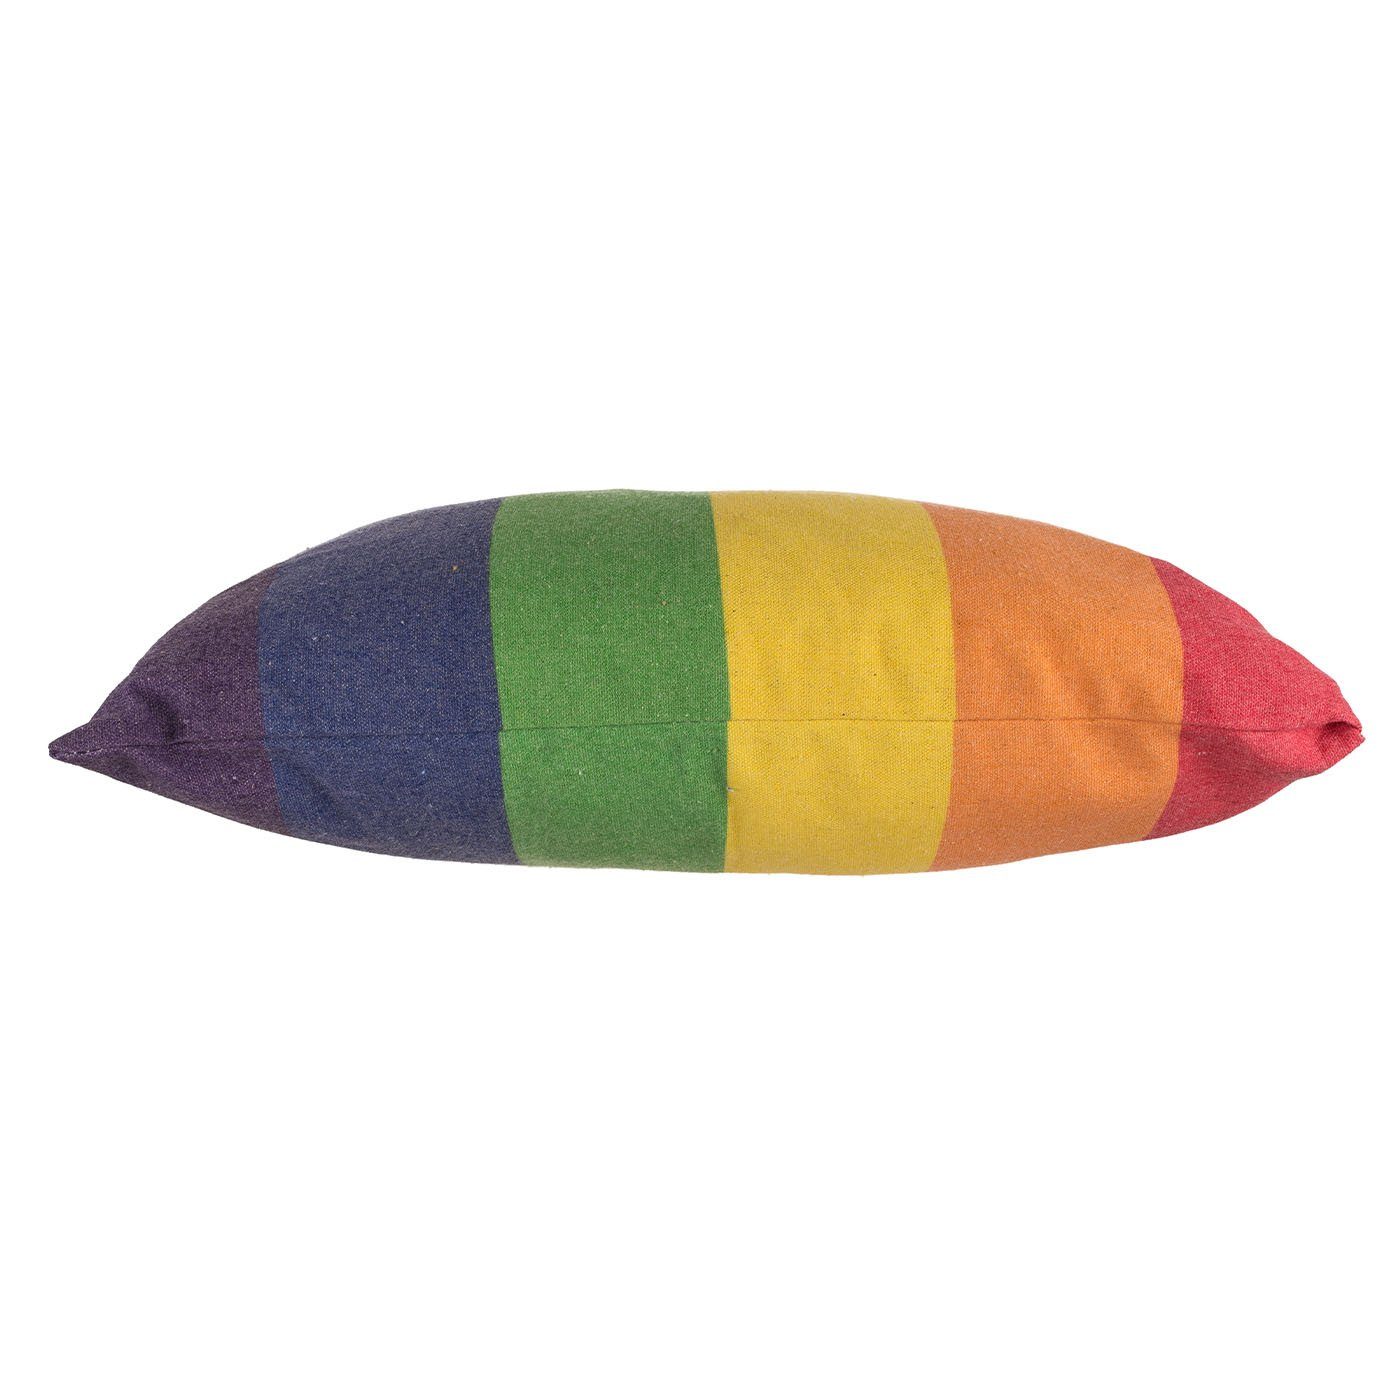 Kissen-Bezug Regenbogen ReWu 40 40 cm, Kissenhülle x Pride Kissenbezug